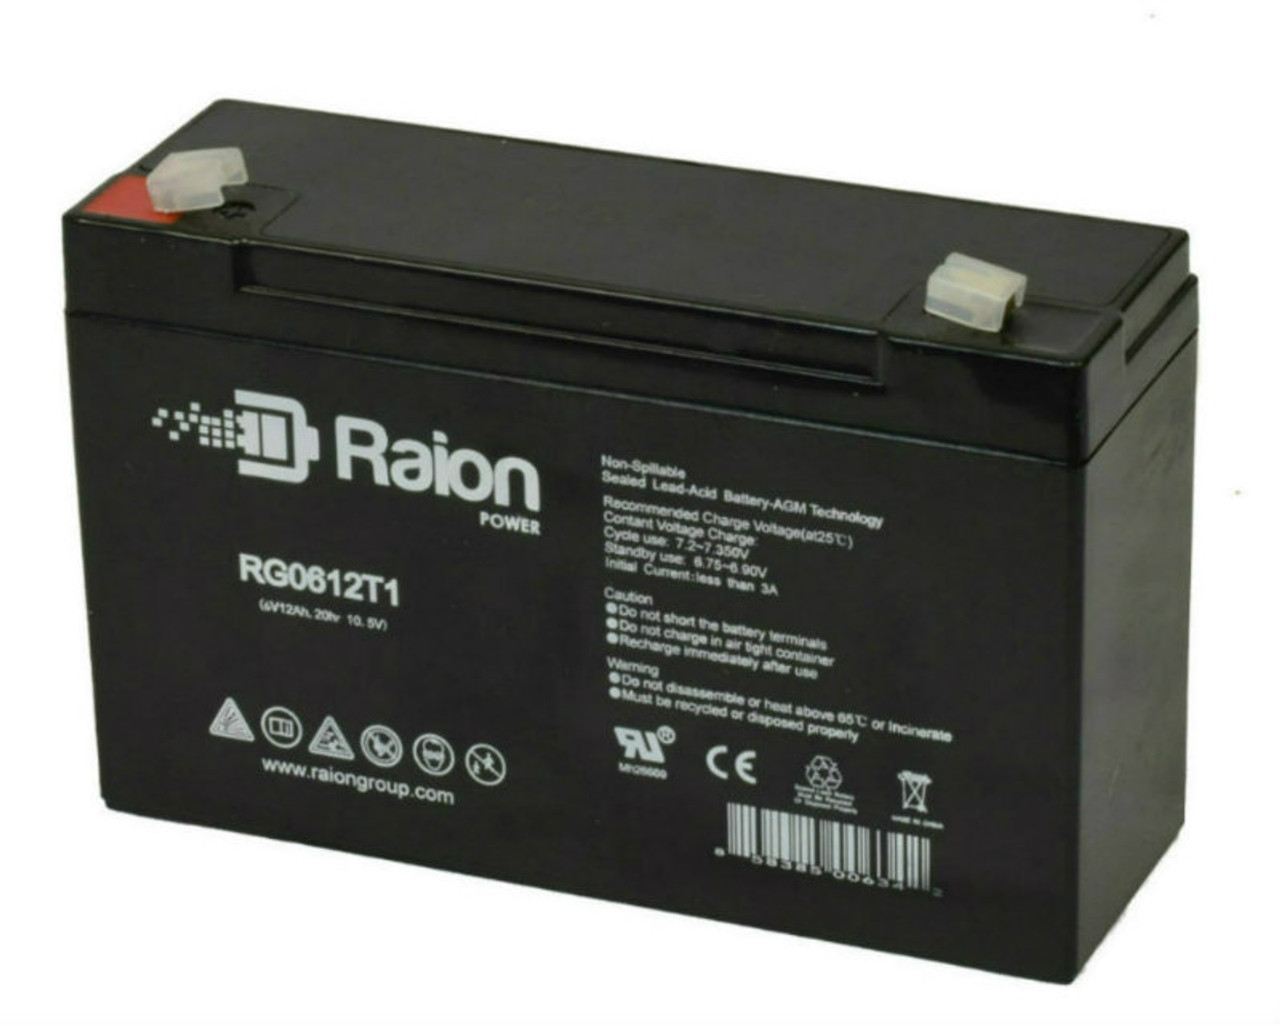 Raion Power RG06120T1 Replacement 6V 12Ah Emergency Light Battery for Sonnenschein EMF4